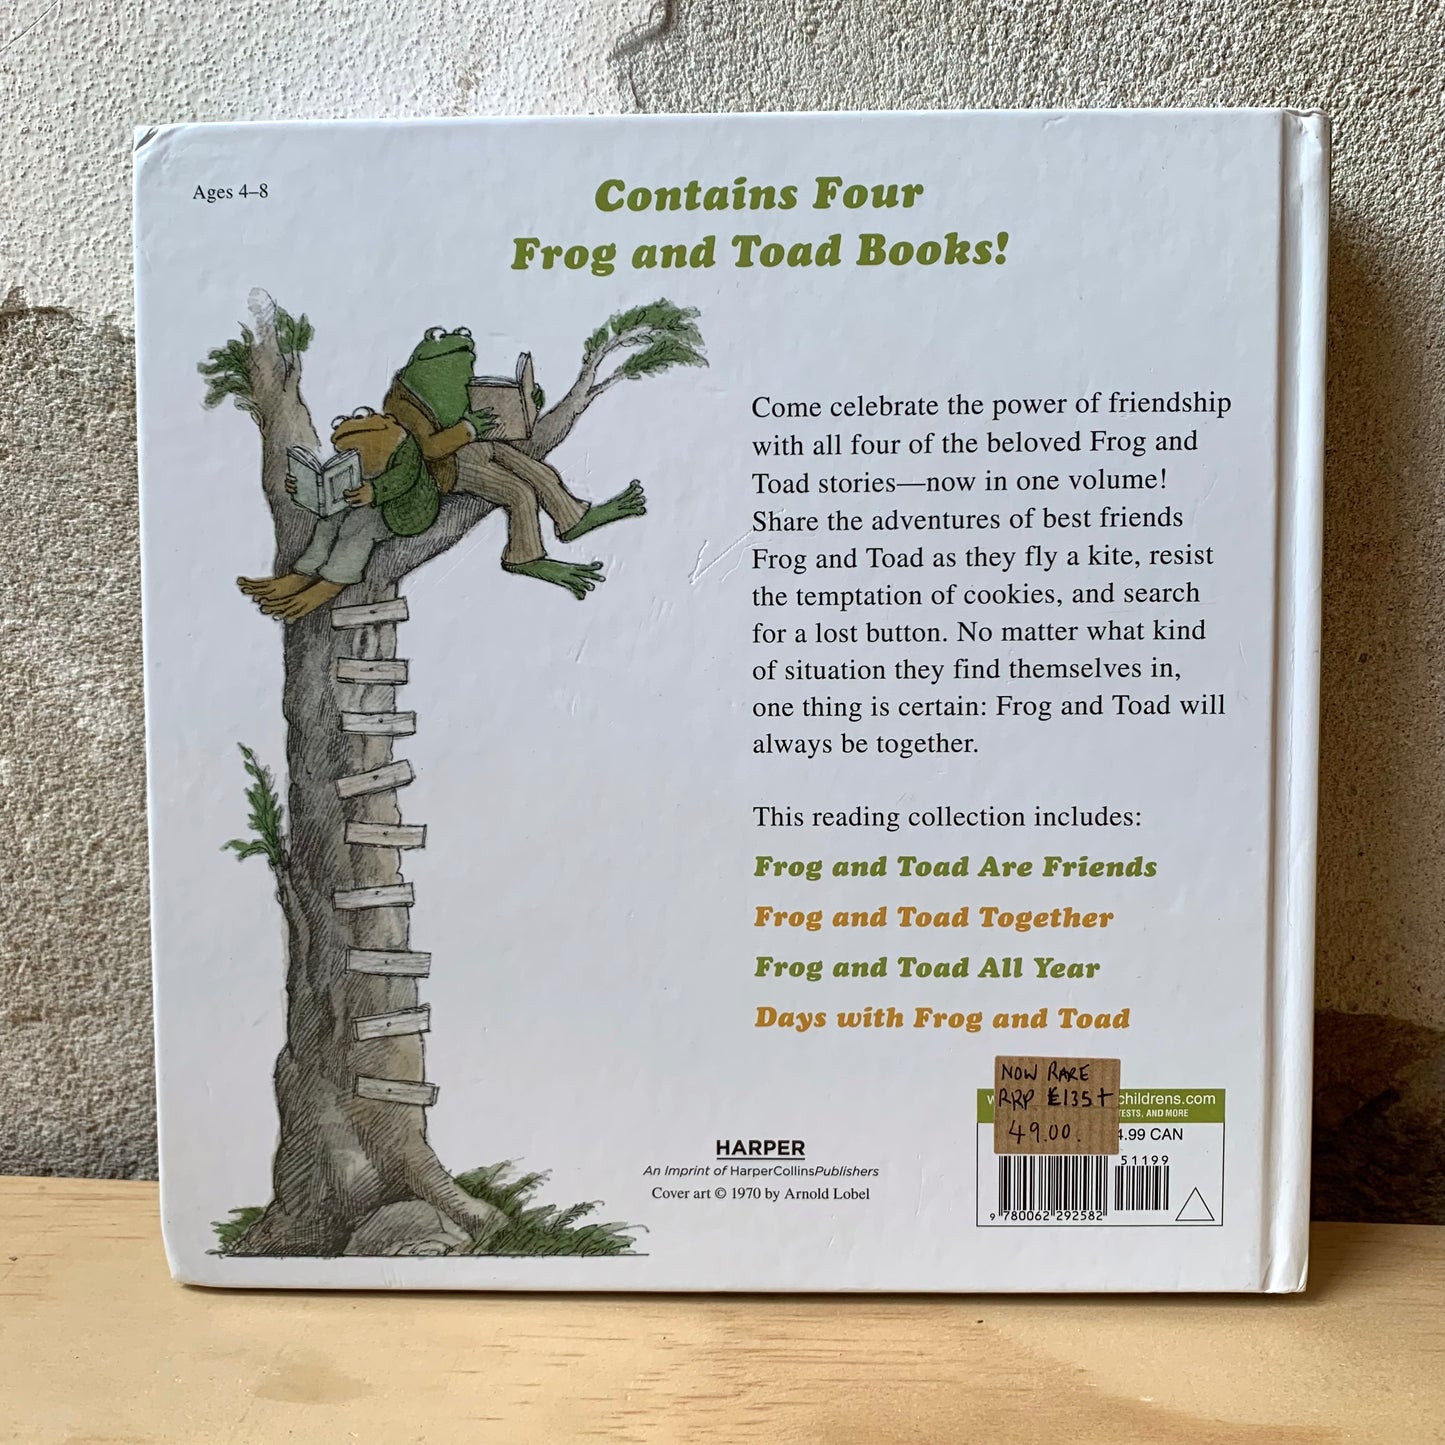 Frog and Toad Storybook Treasury – Arnold Lobel